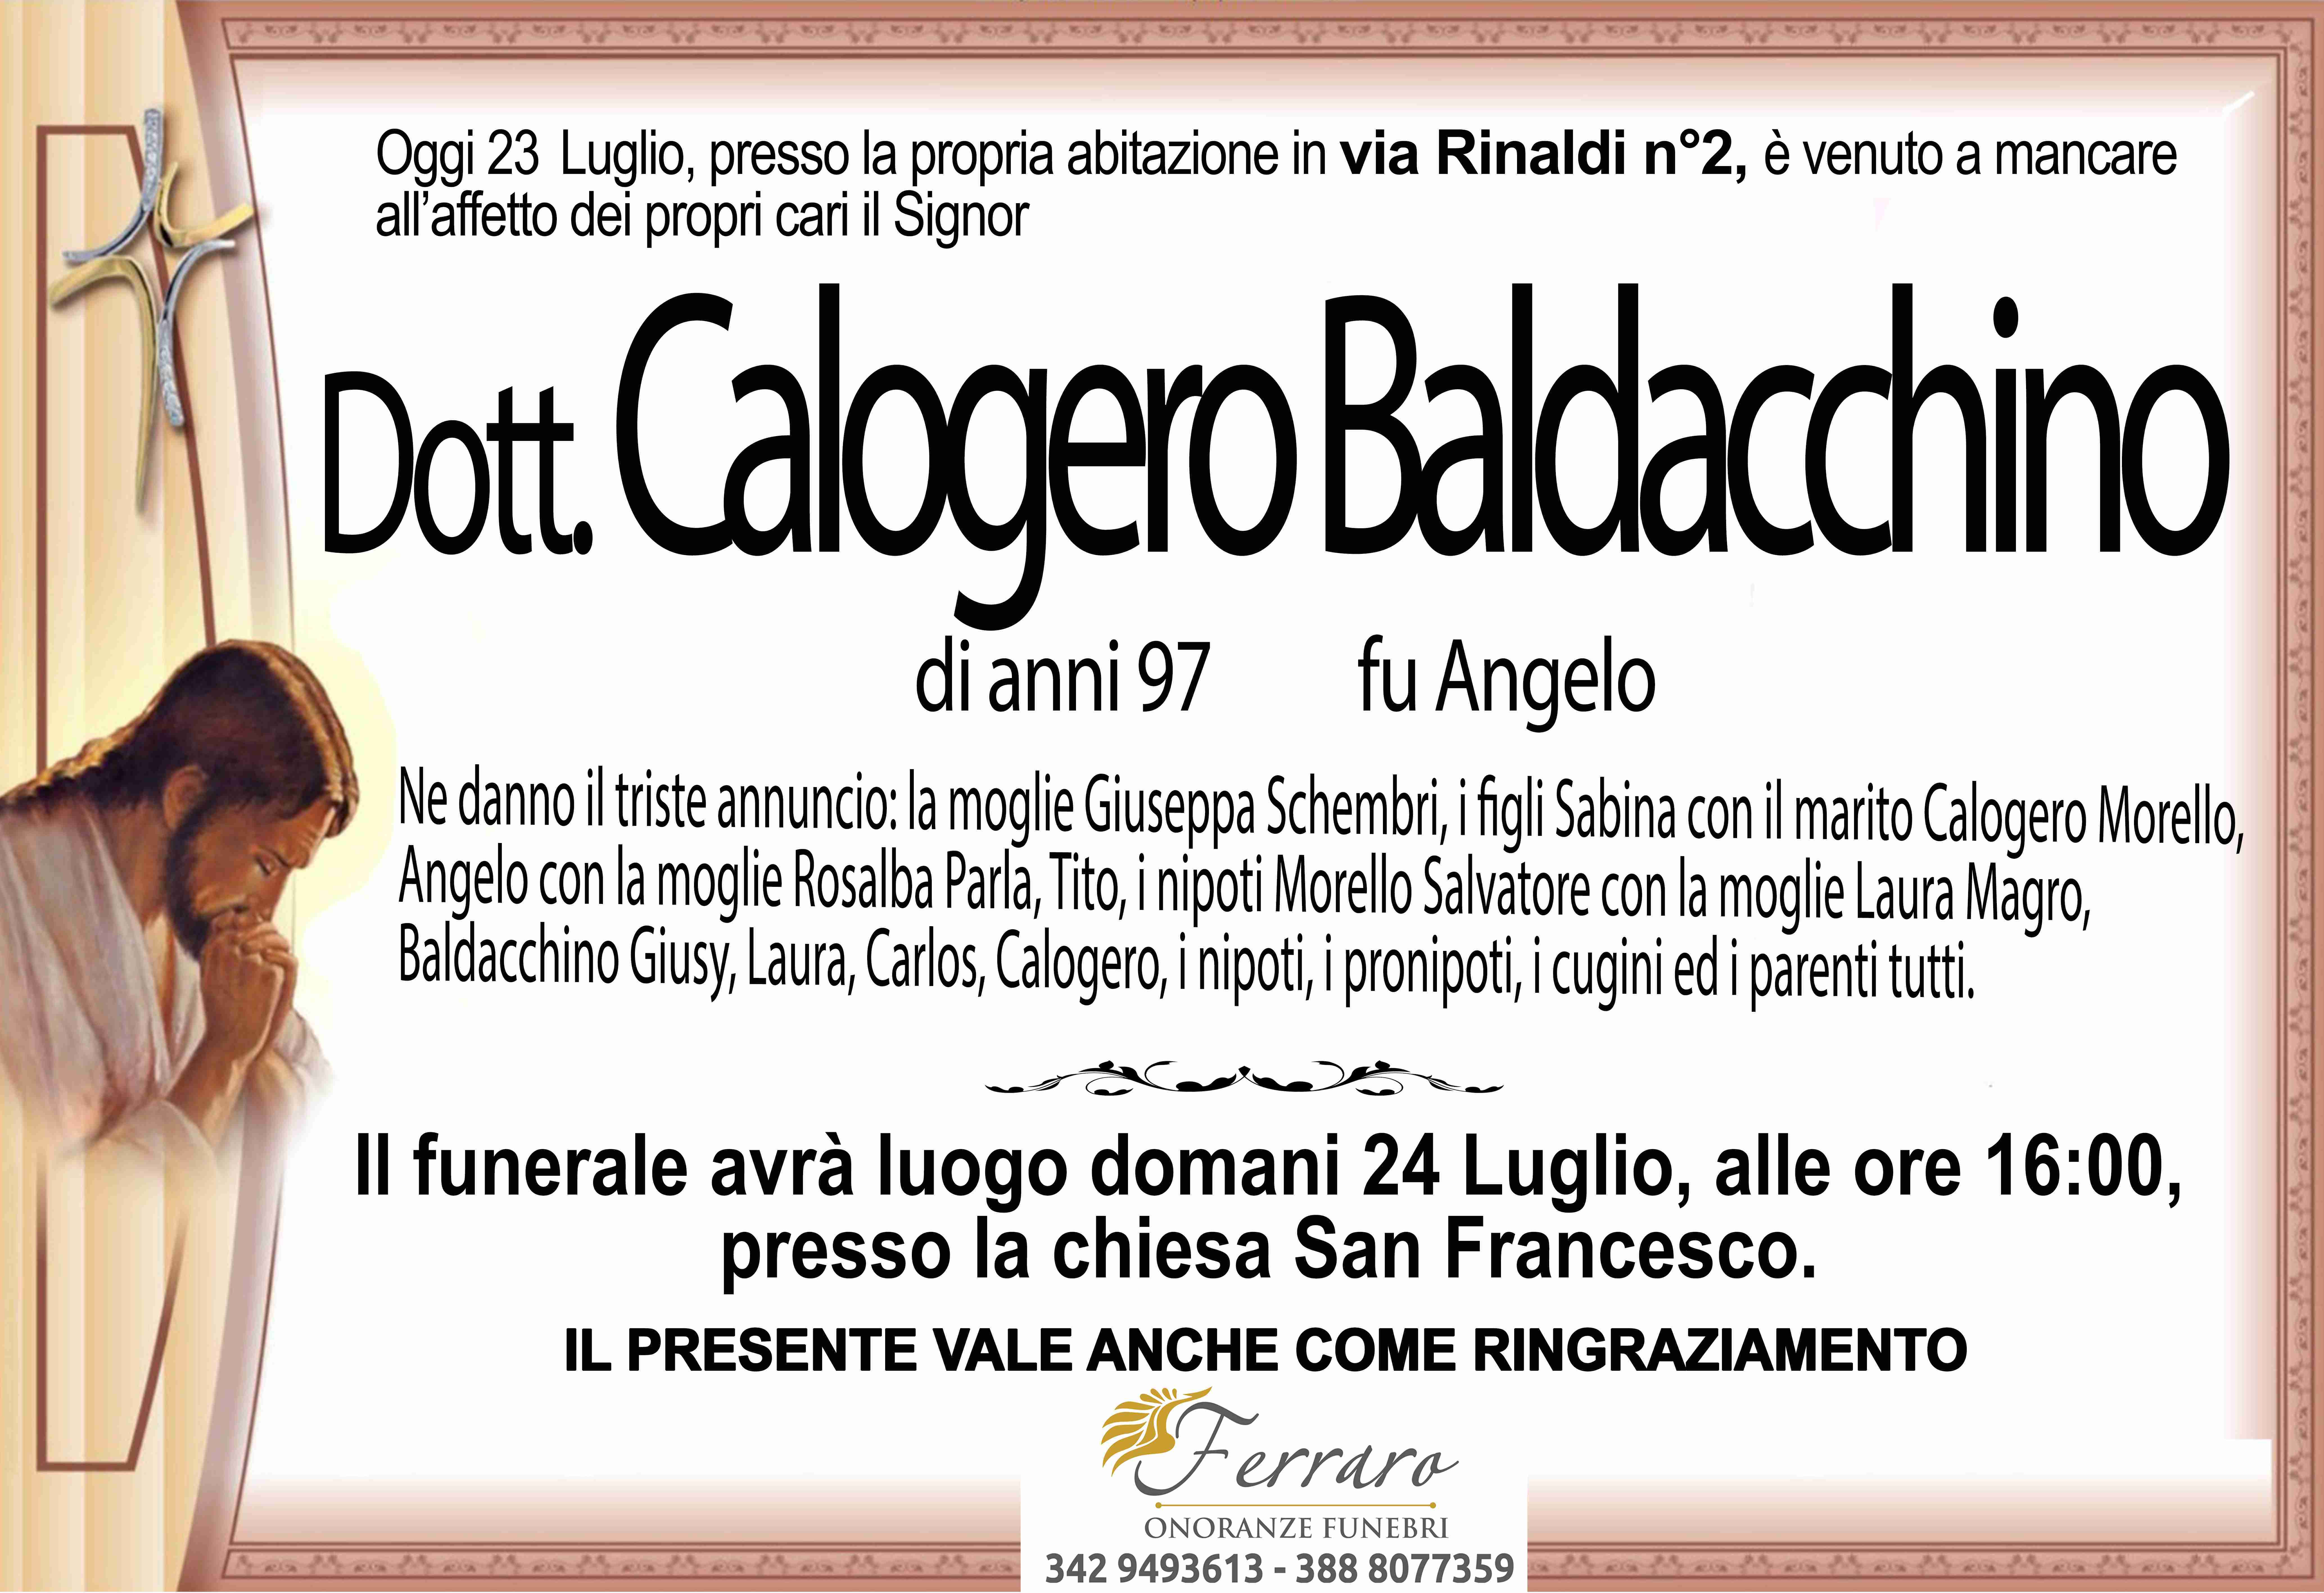 Calogero Baldacchino